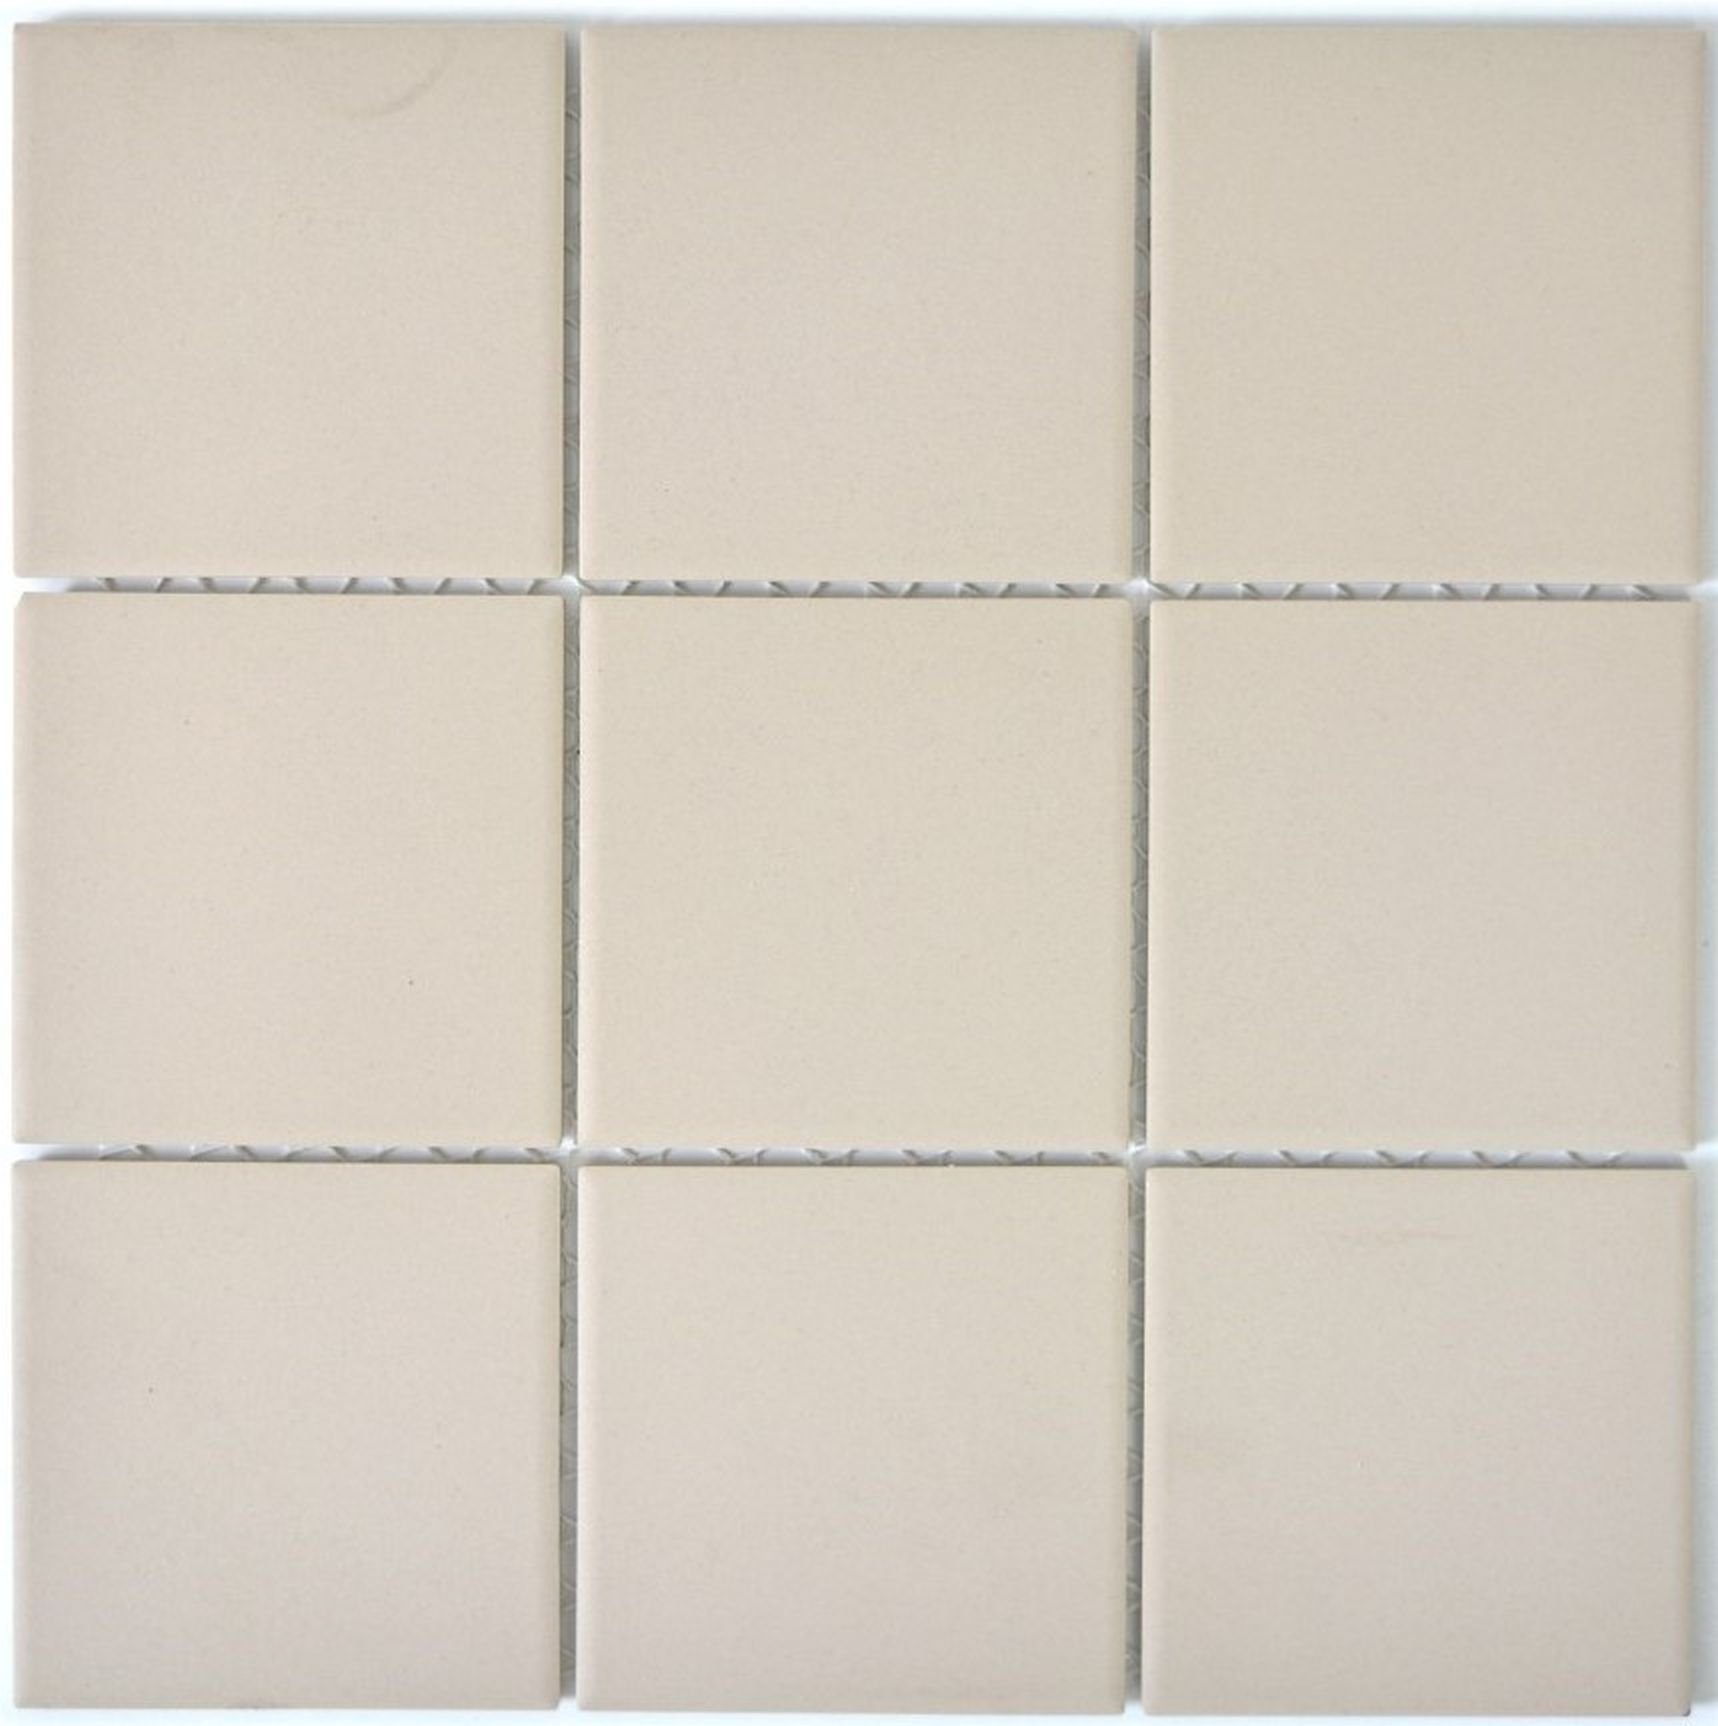 Mosani Mosaikfliesen Quadratisches Keramik unglasiert Mosaik hellbeige matt / 10 Matten